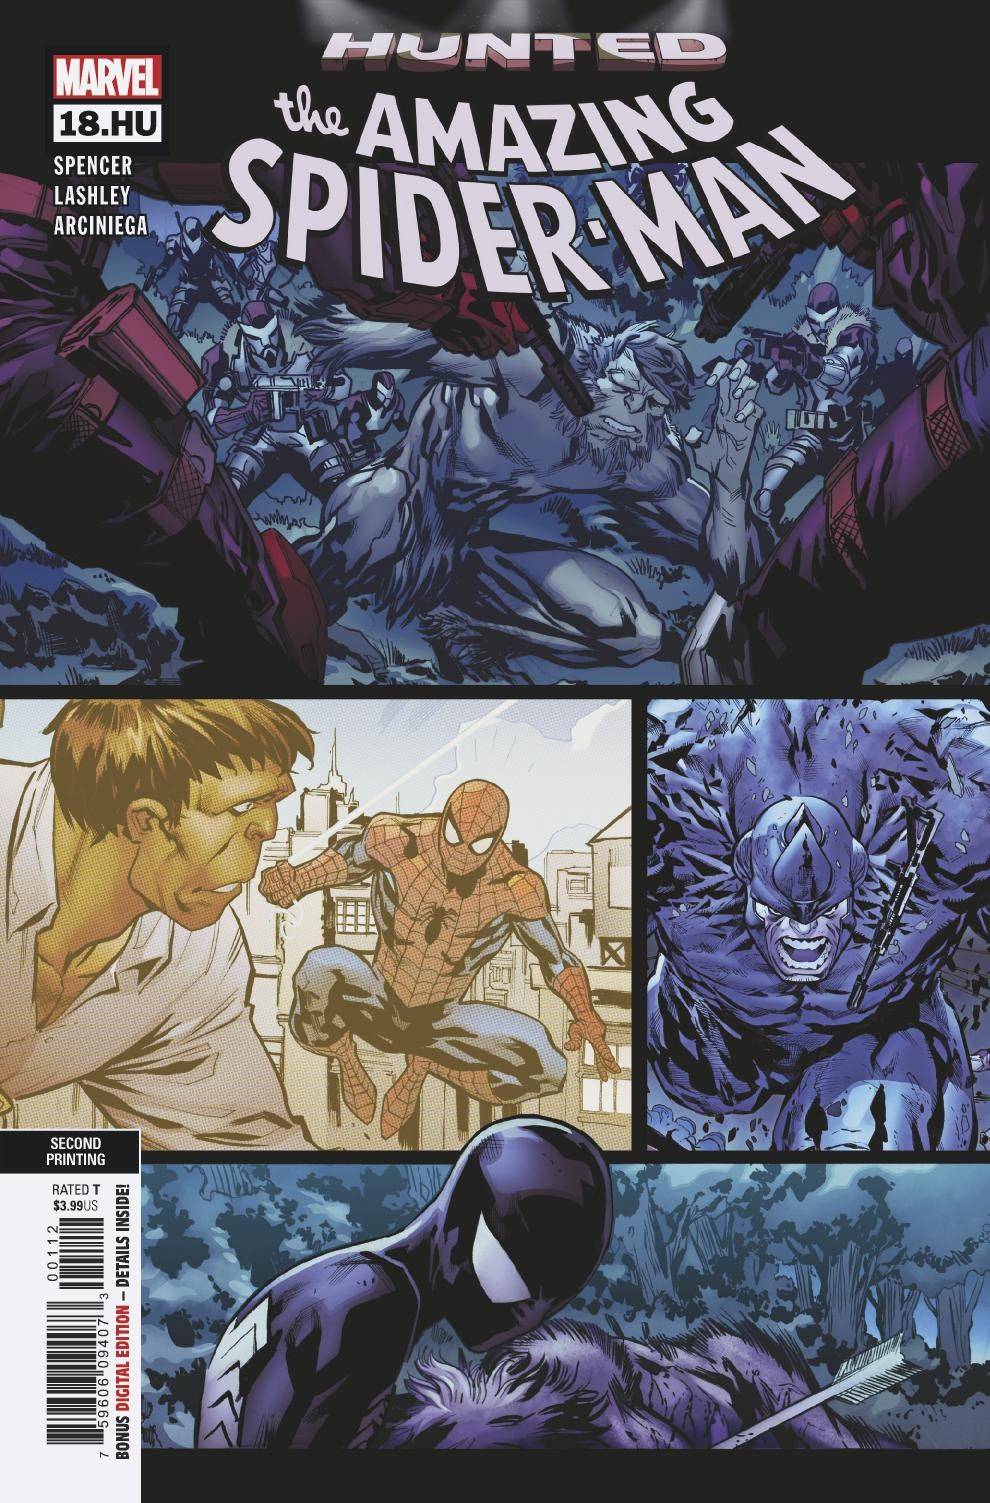 Amazing Spider-Man #18.hu 2nd Printing Lashley Variant (2018)